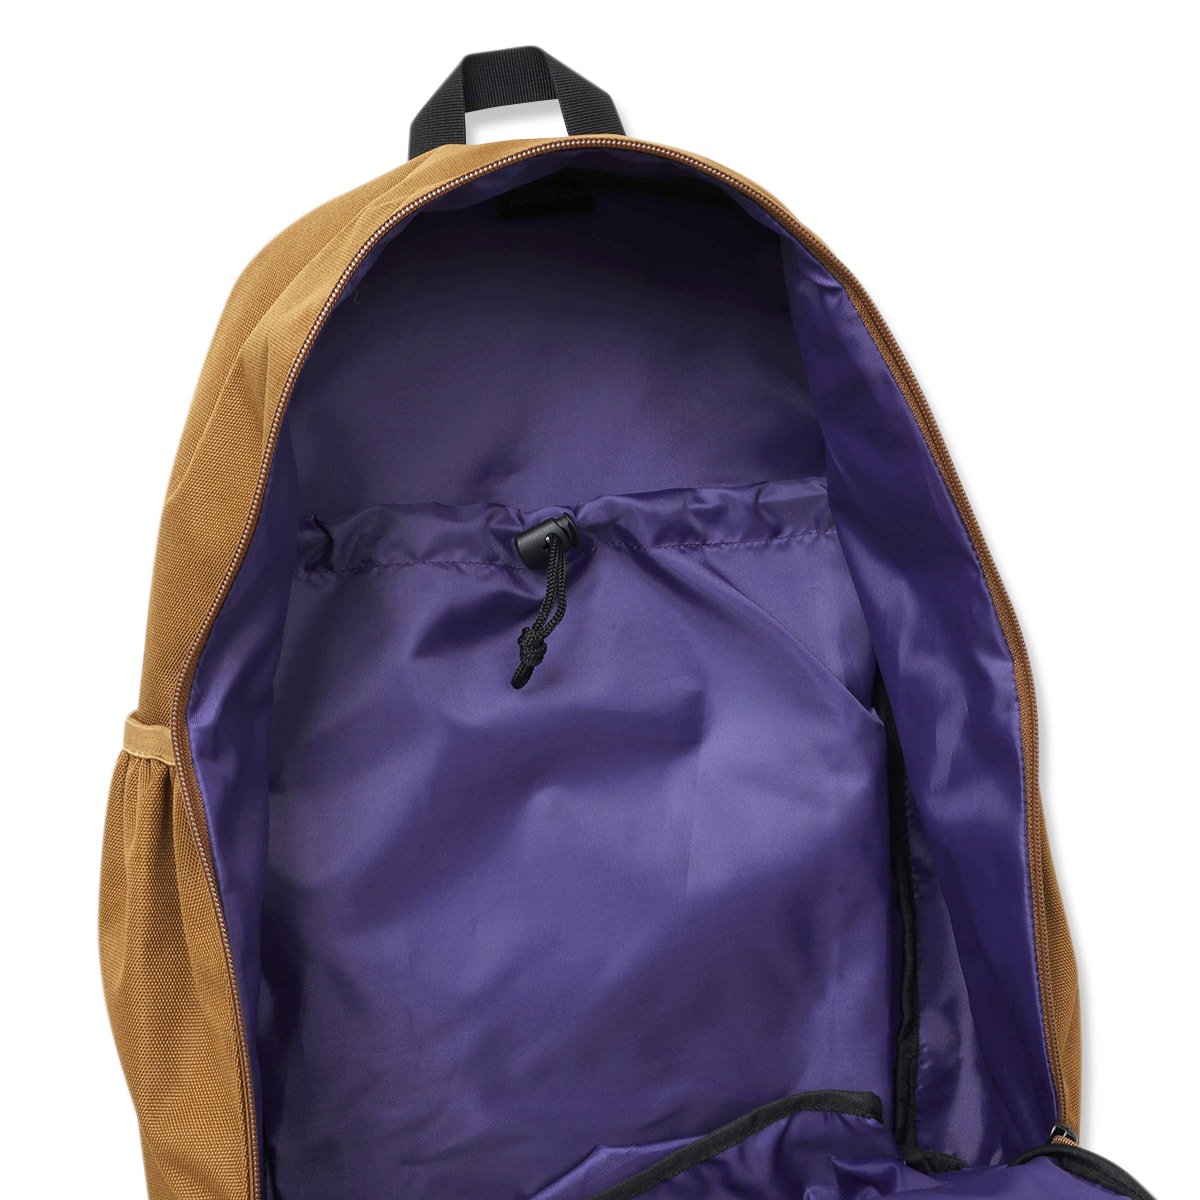 workout backpack 2.0【oak brown/purple】 - Arch ☆ アーチ 